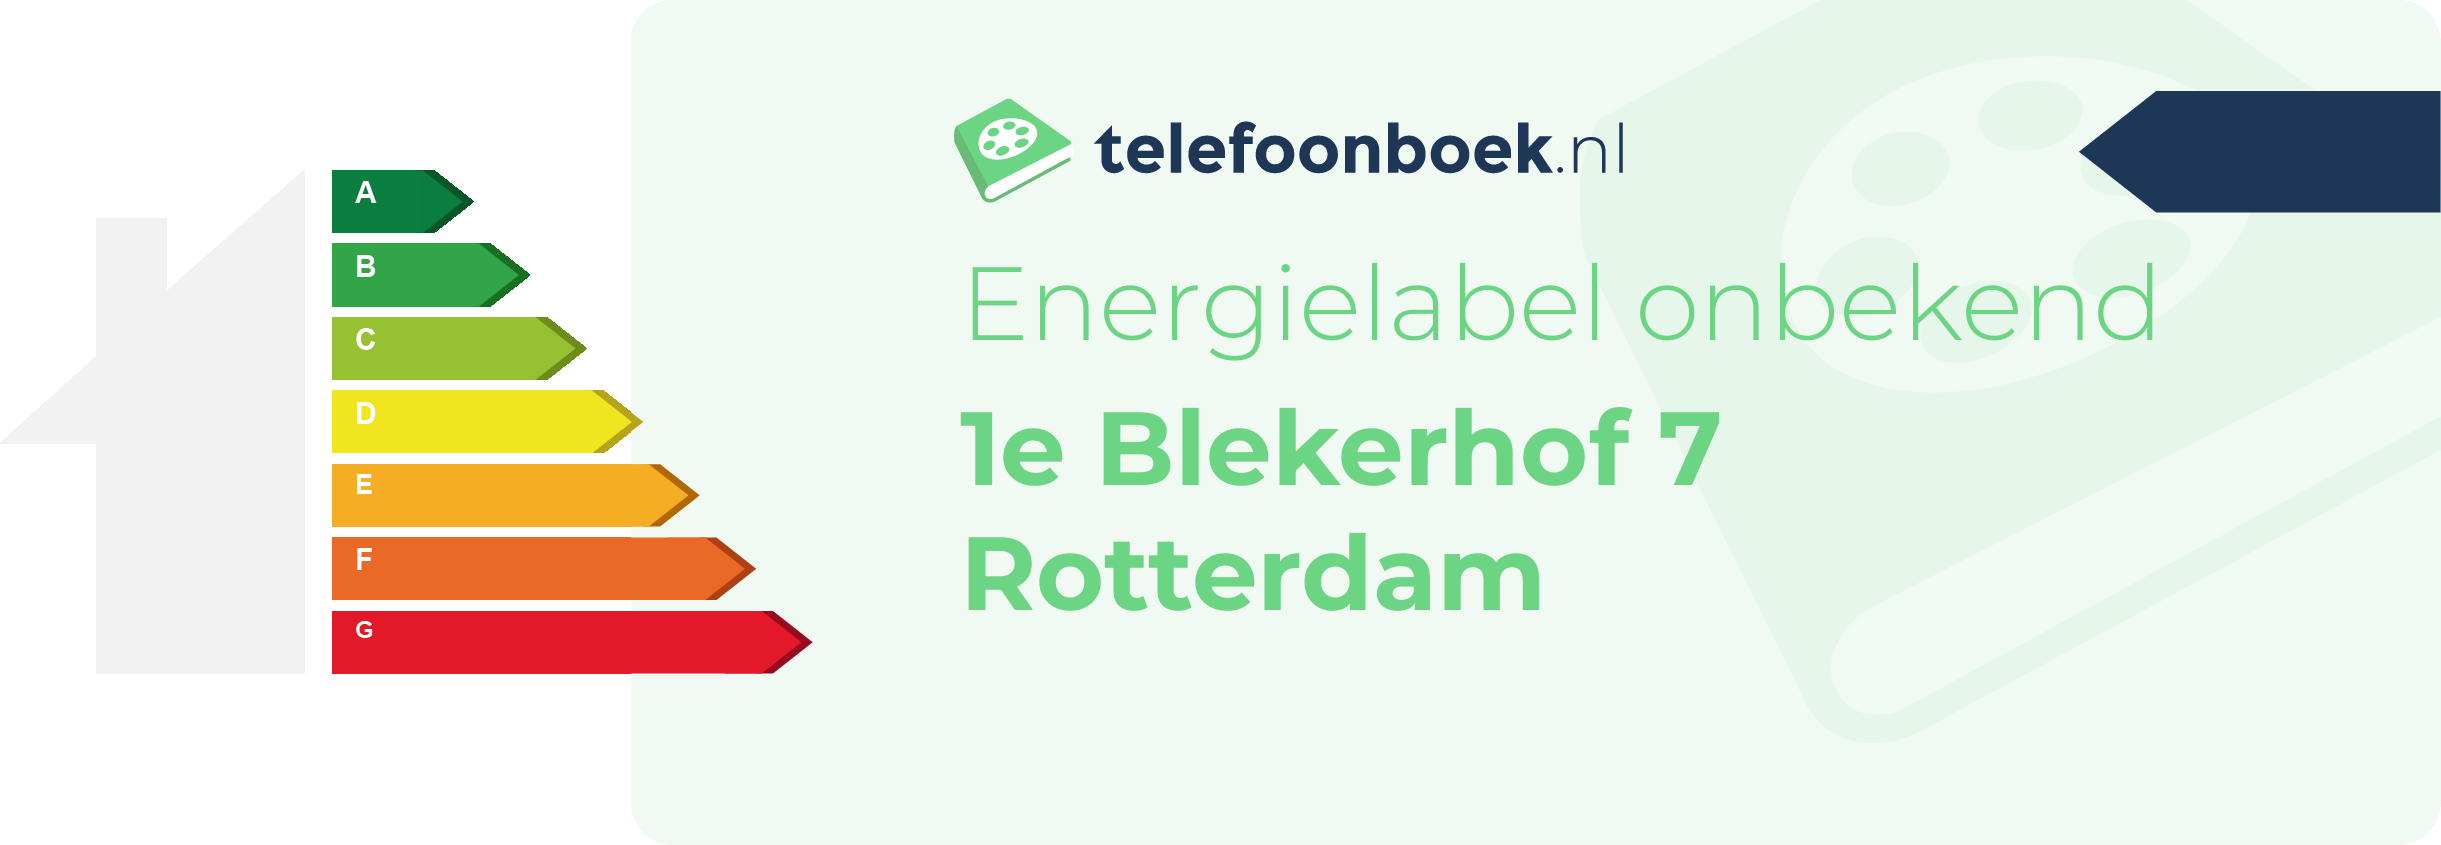 Energielabel 1e Blekerhof 7 Rotterdam